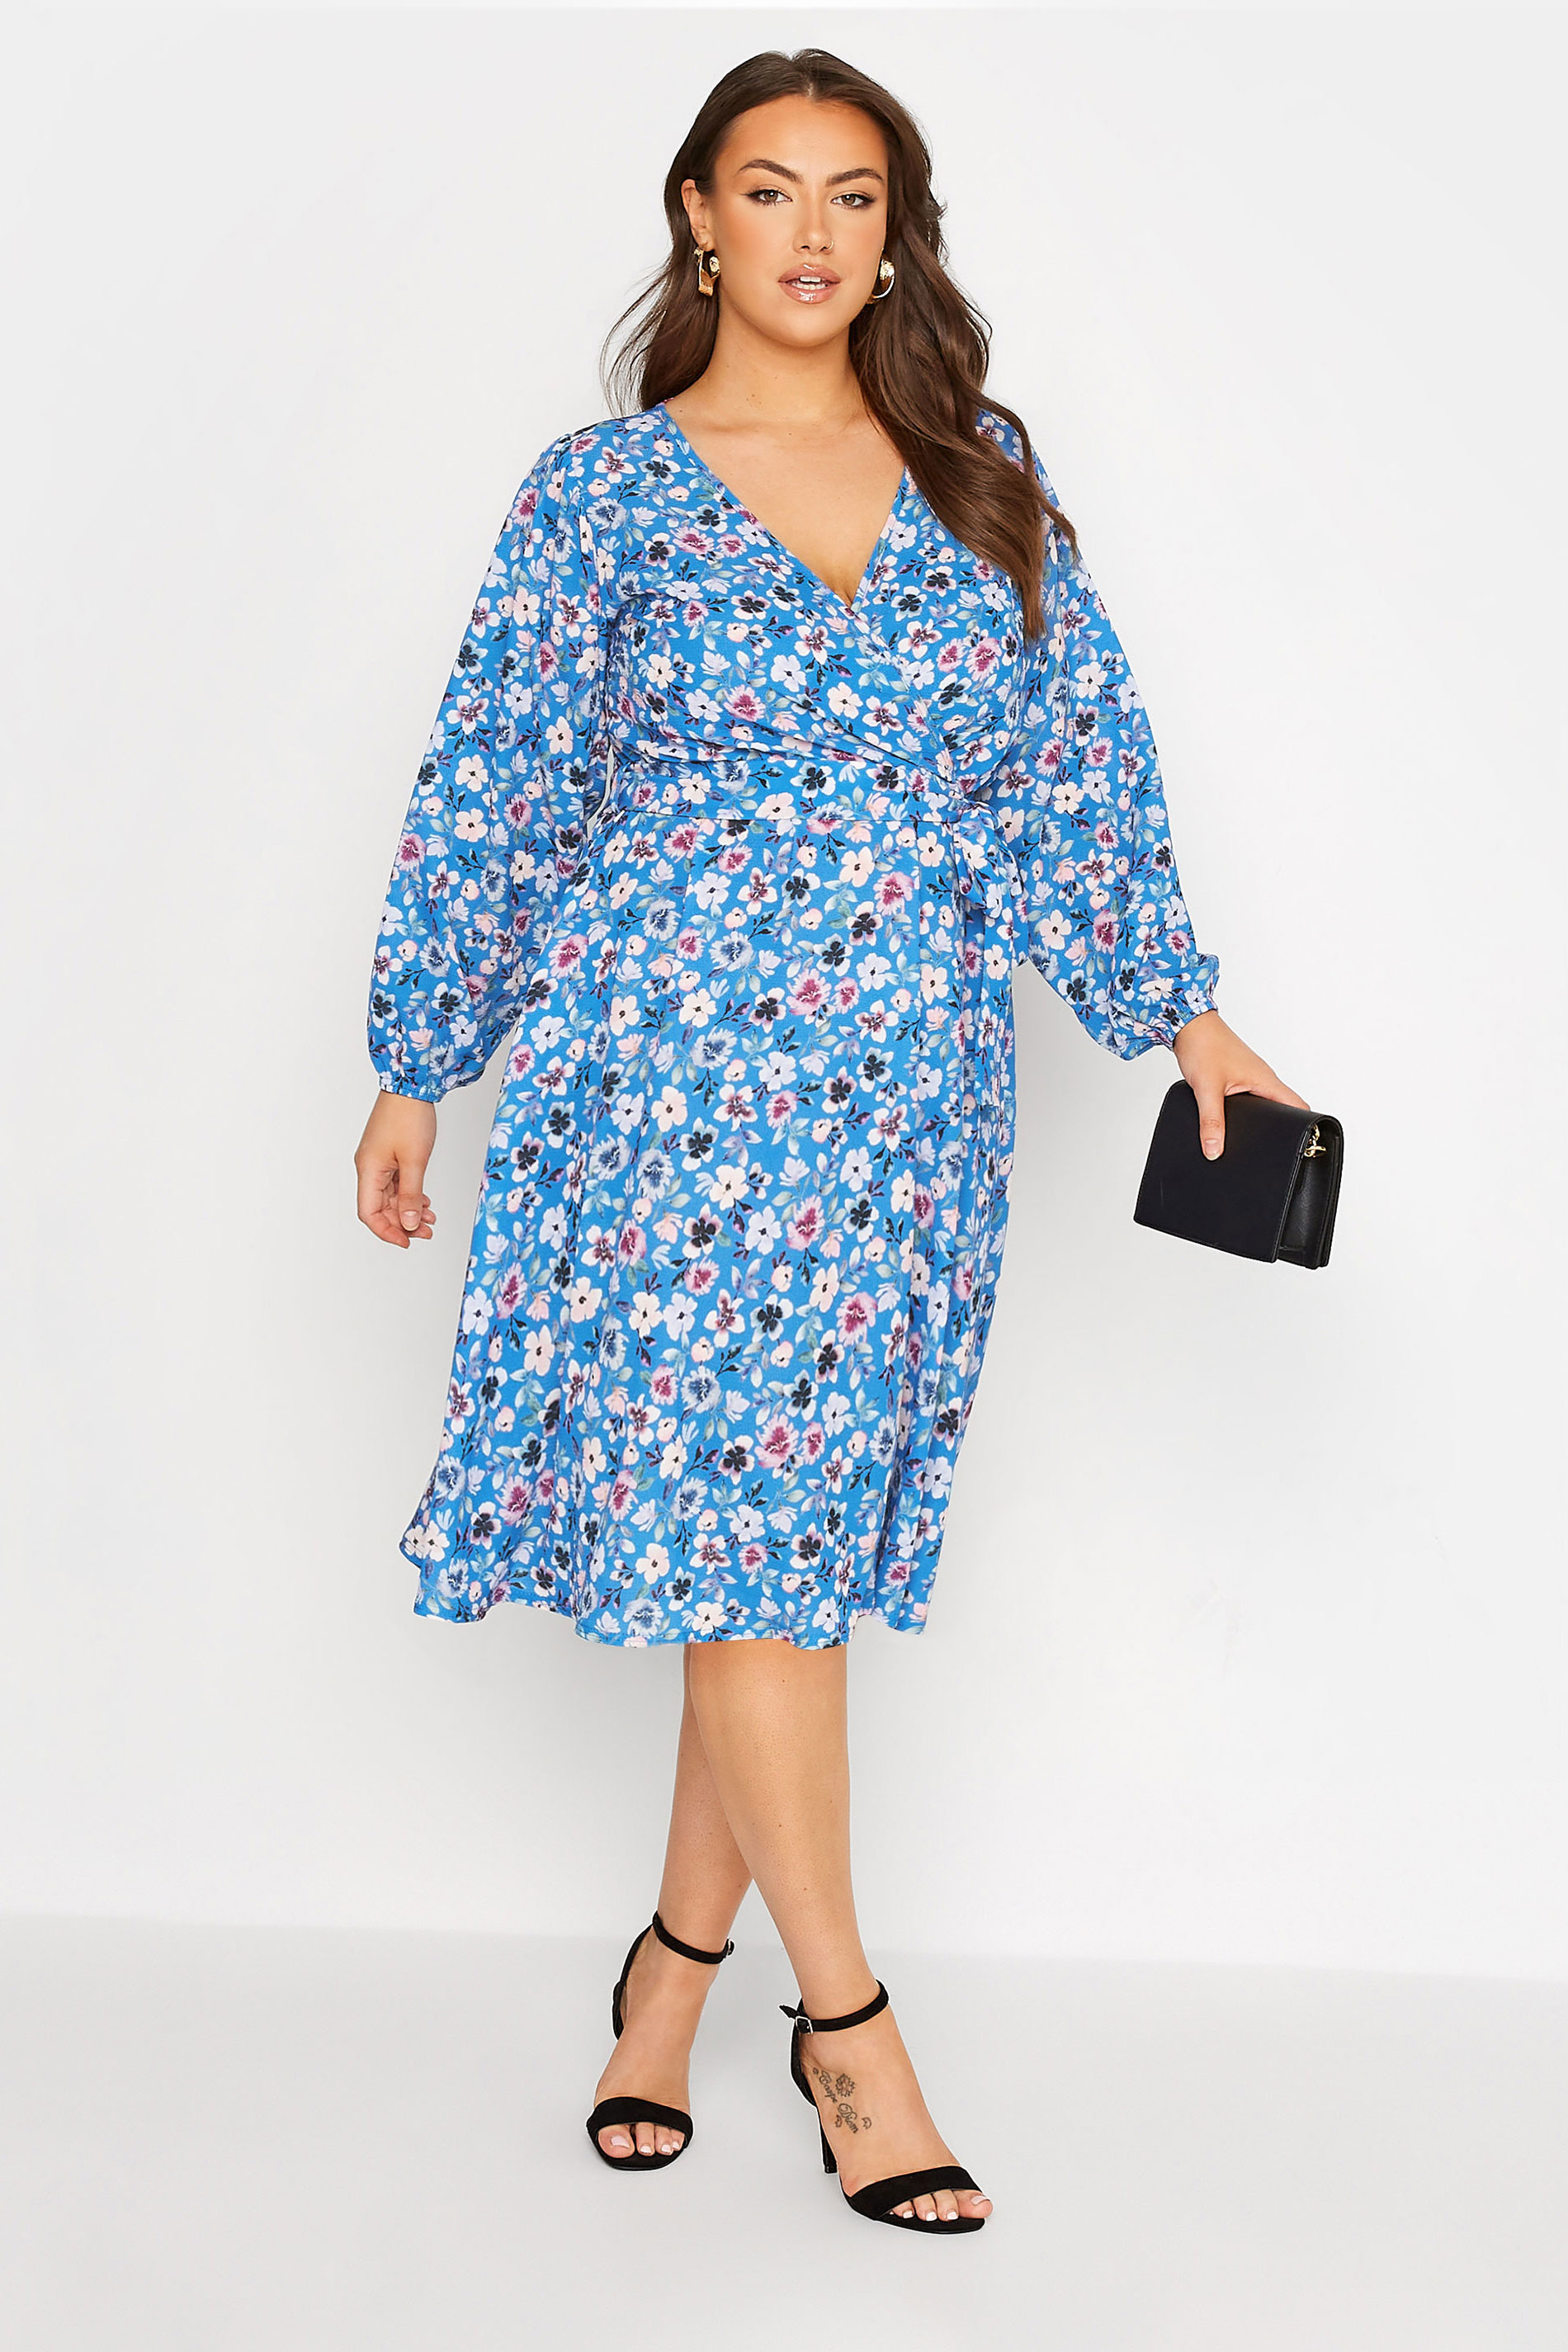 YOURS LONDON Plus Size Blue Floral Print Wrap Dress | Yours Clothing 2